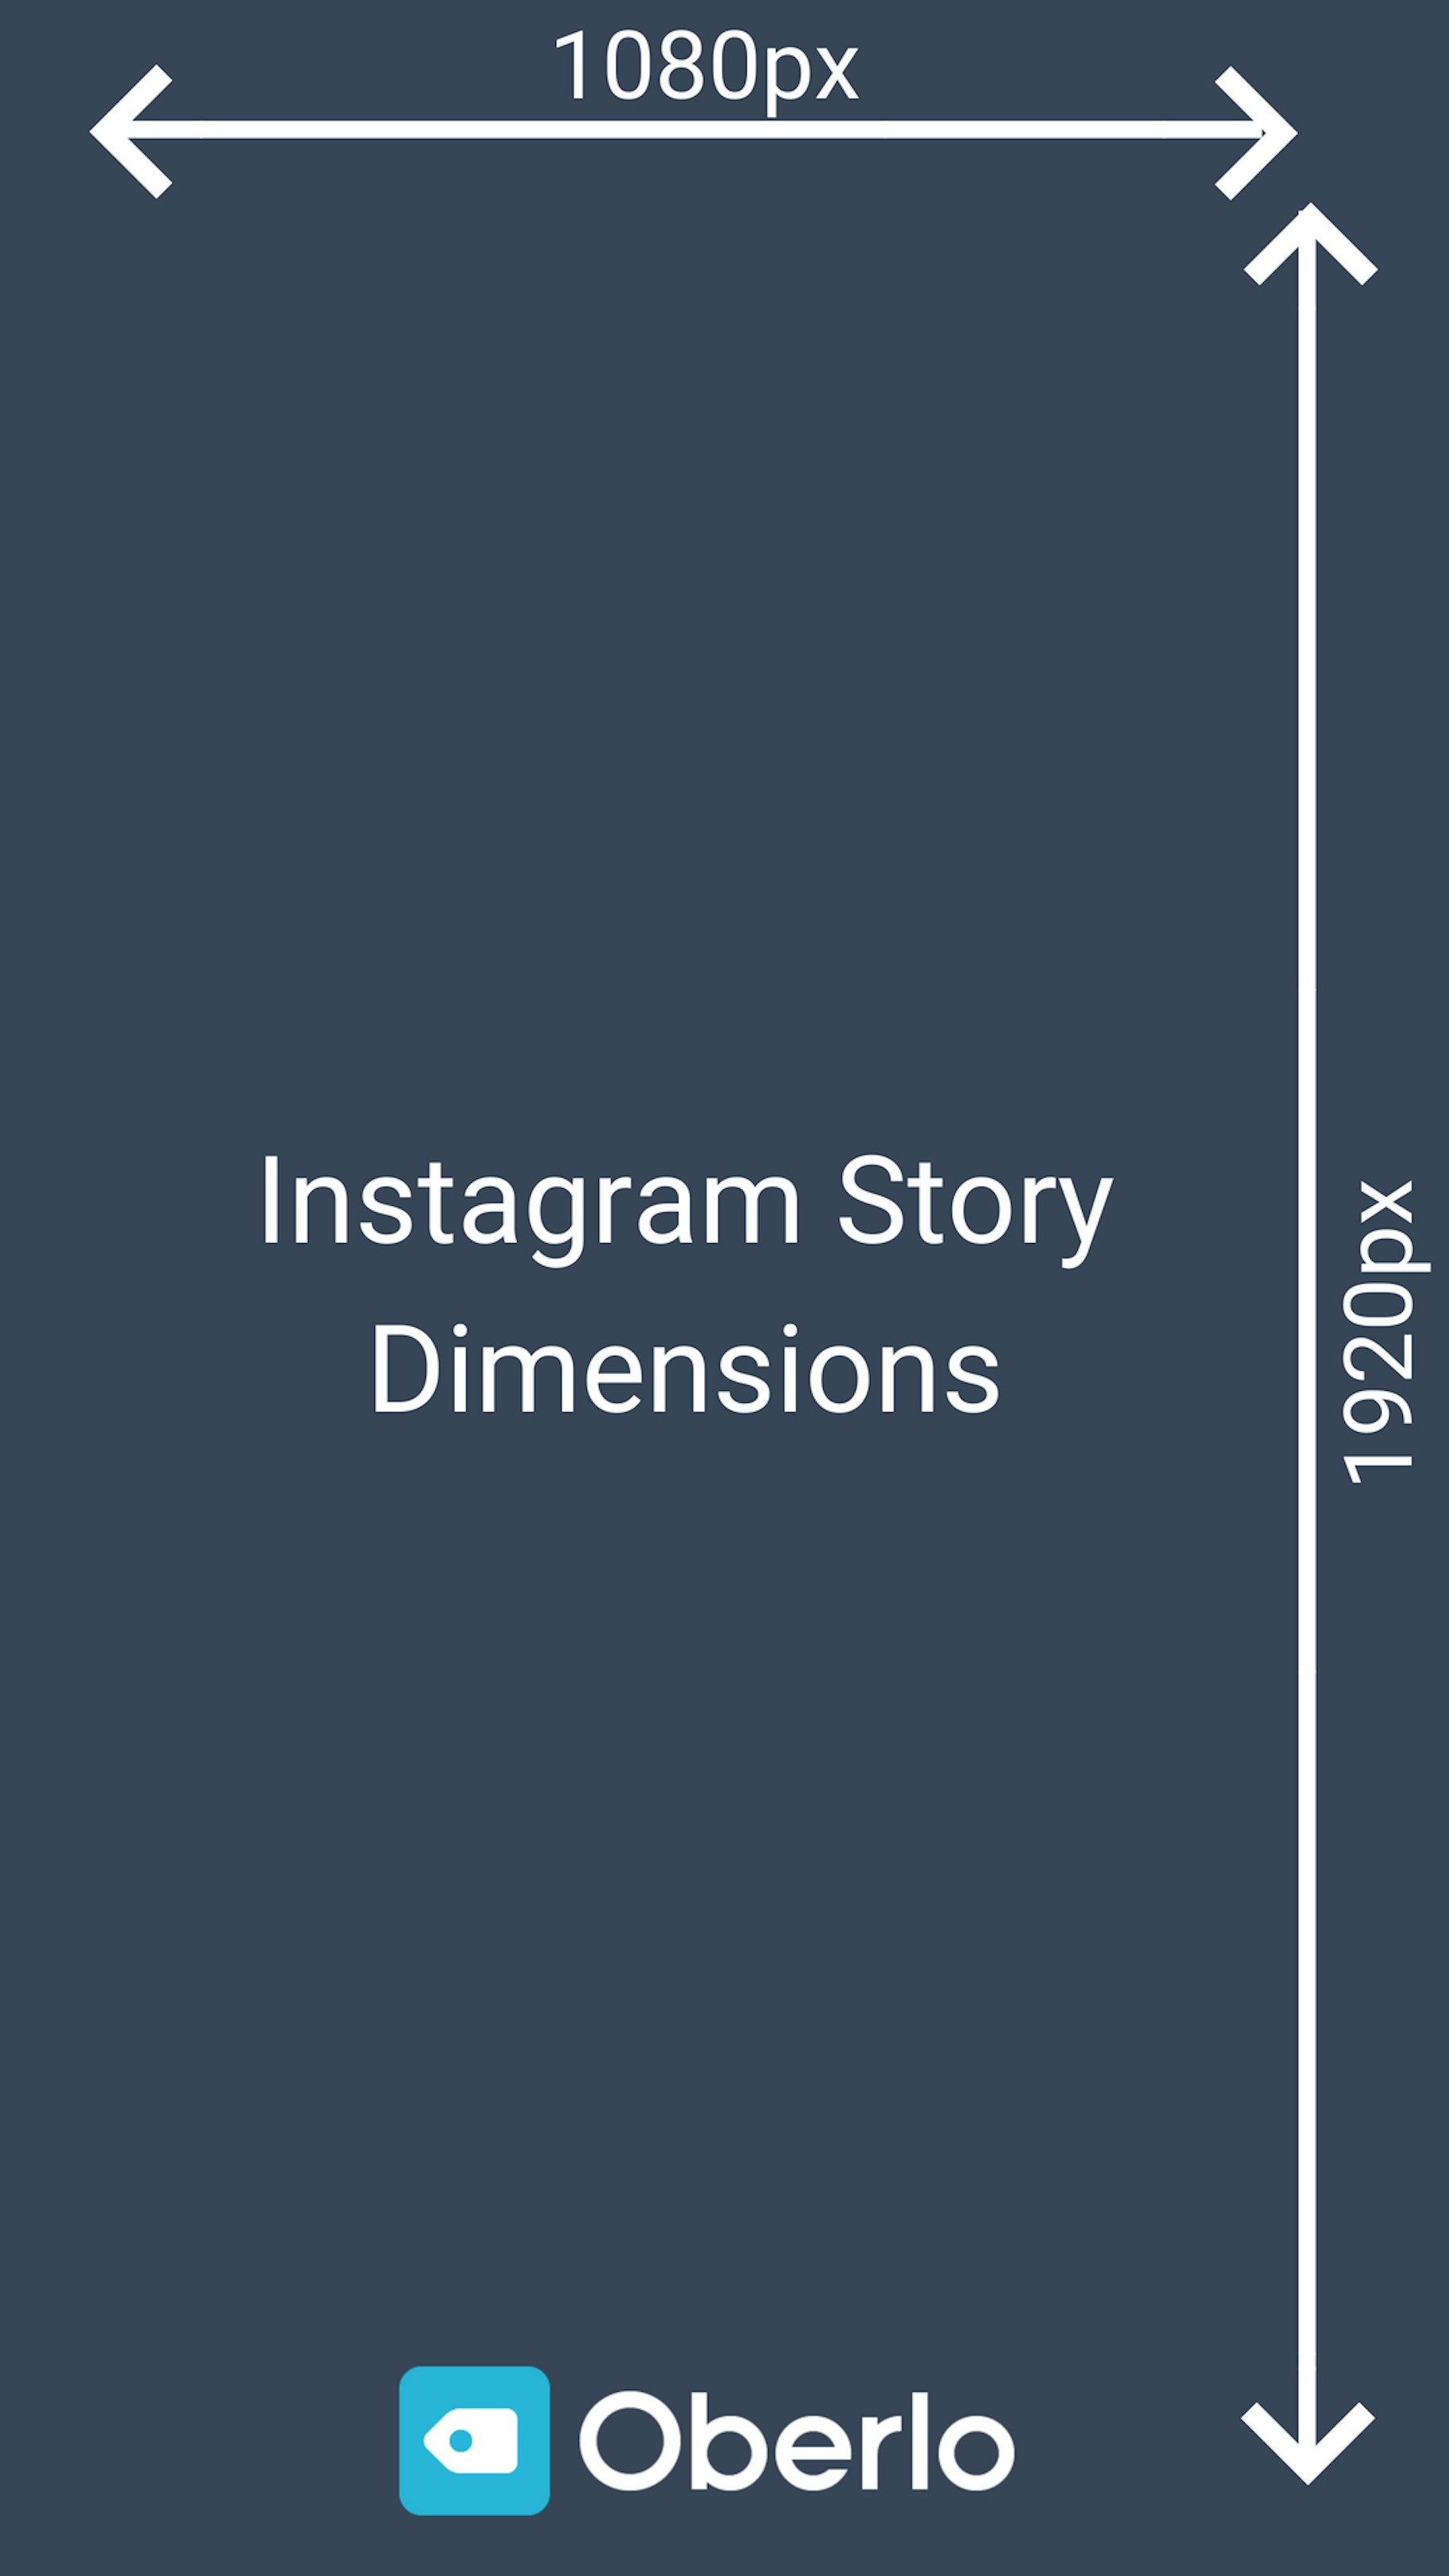 Instagram Stories Dimensions